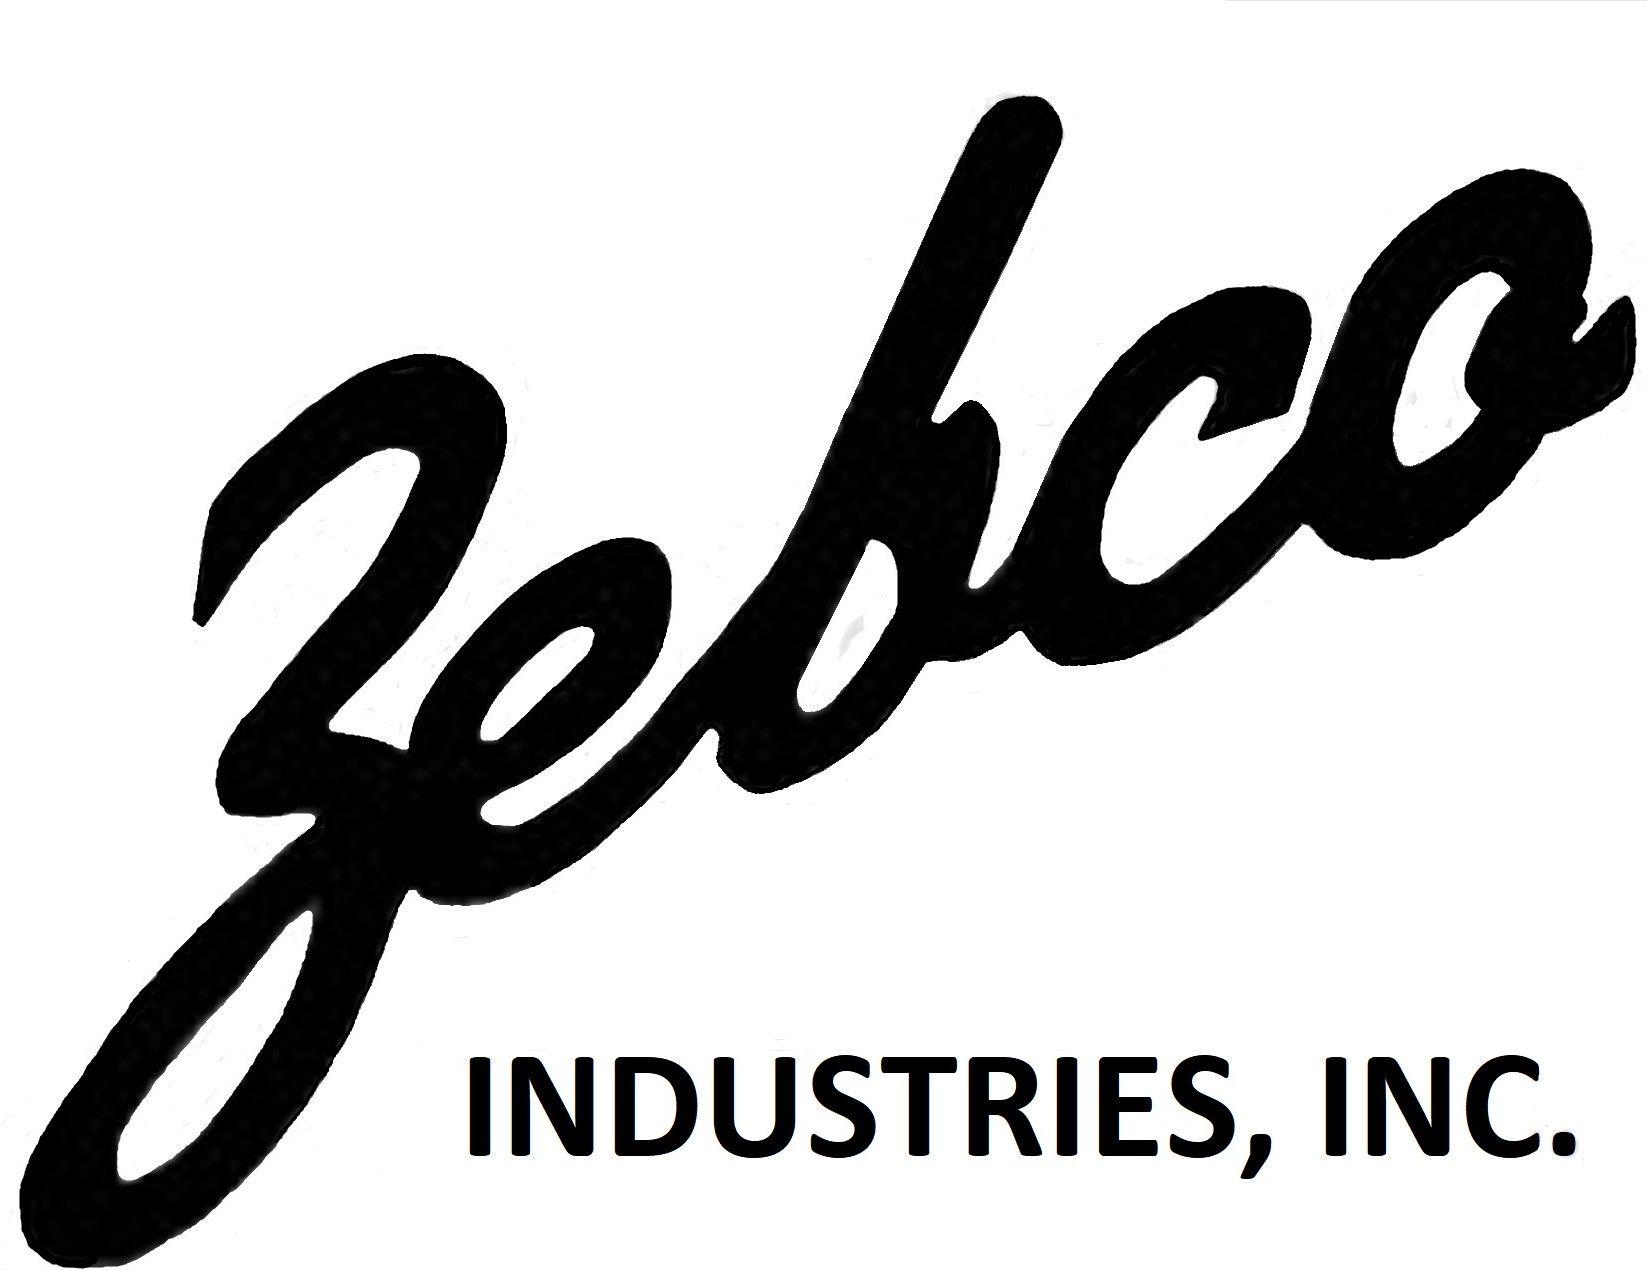 Zebco Logo - About Us 2 Industries Inc